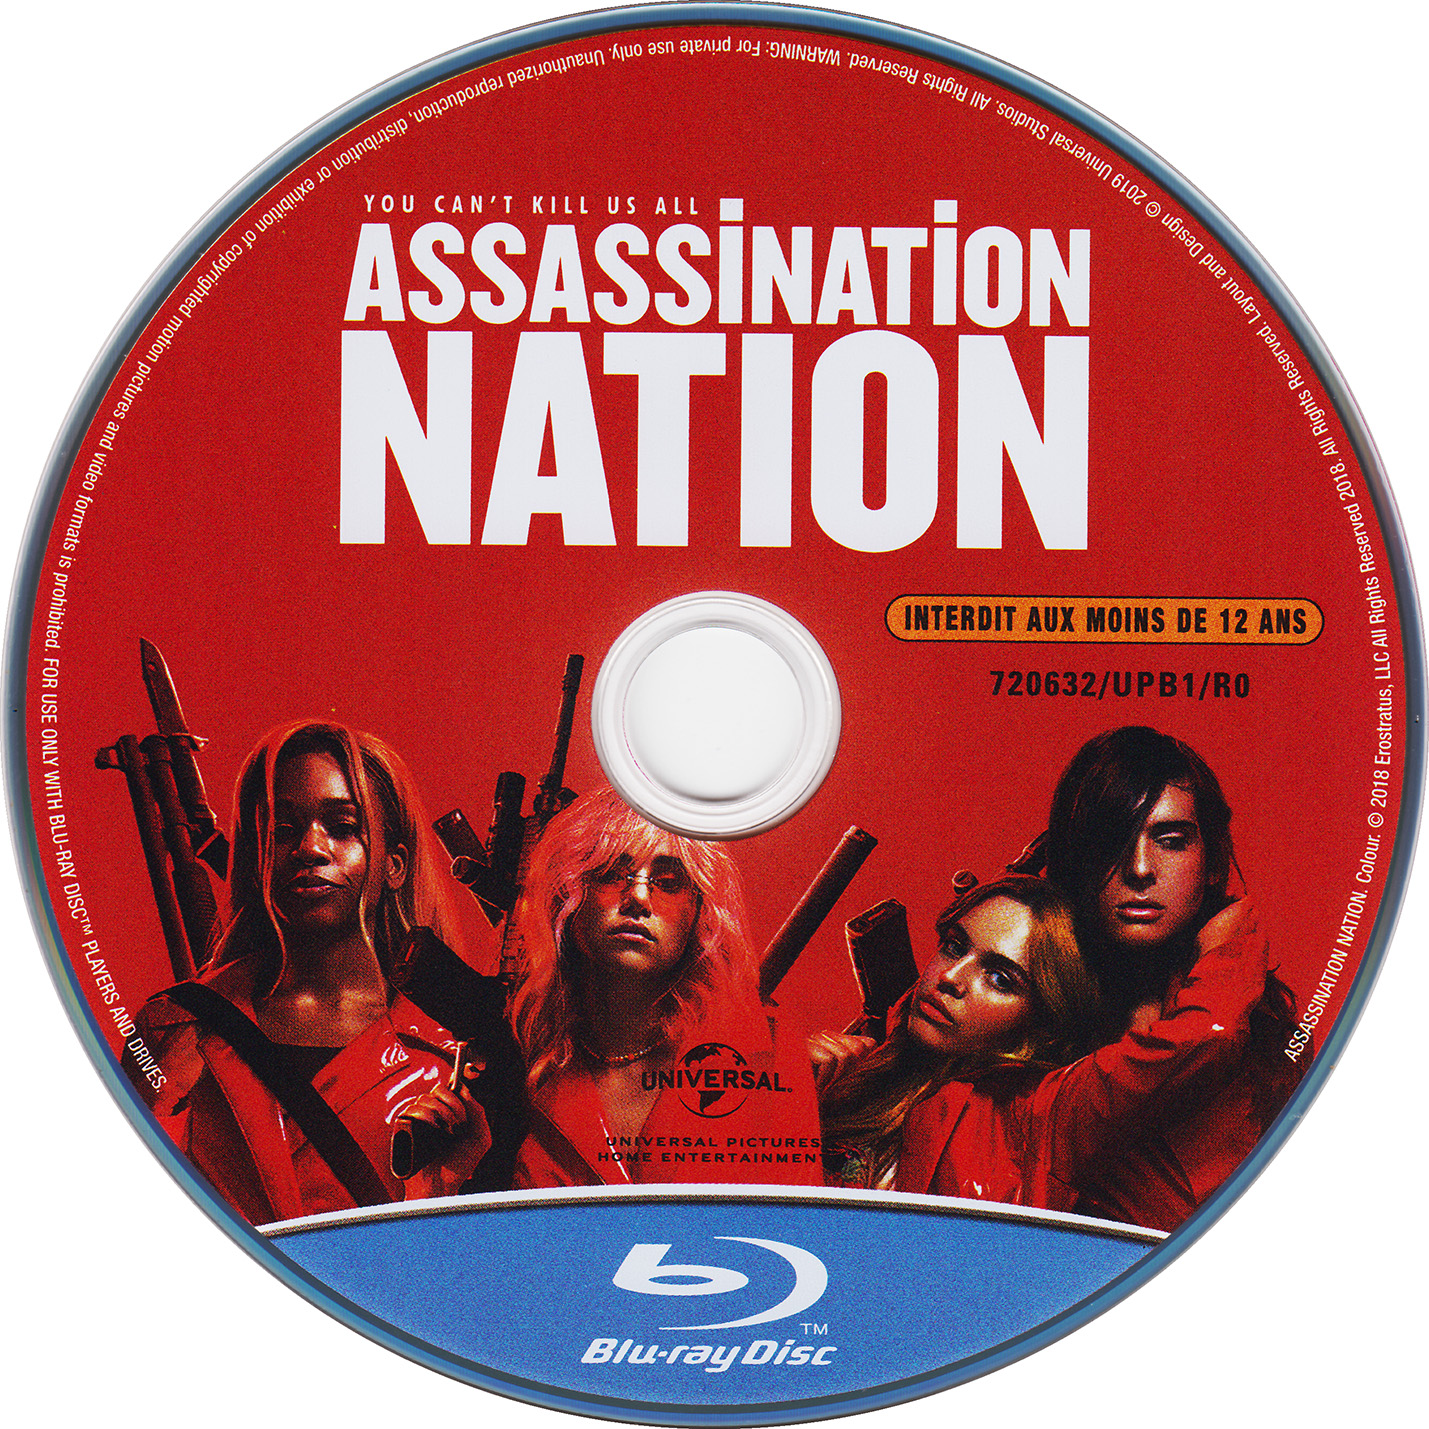 Assassination nation (BLU-RAY)